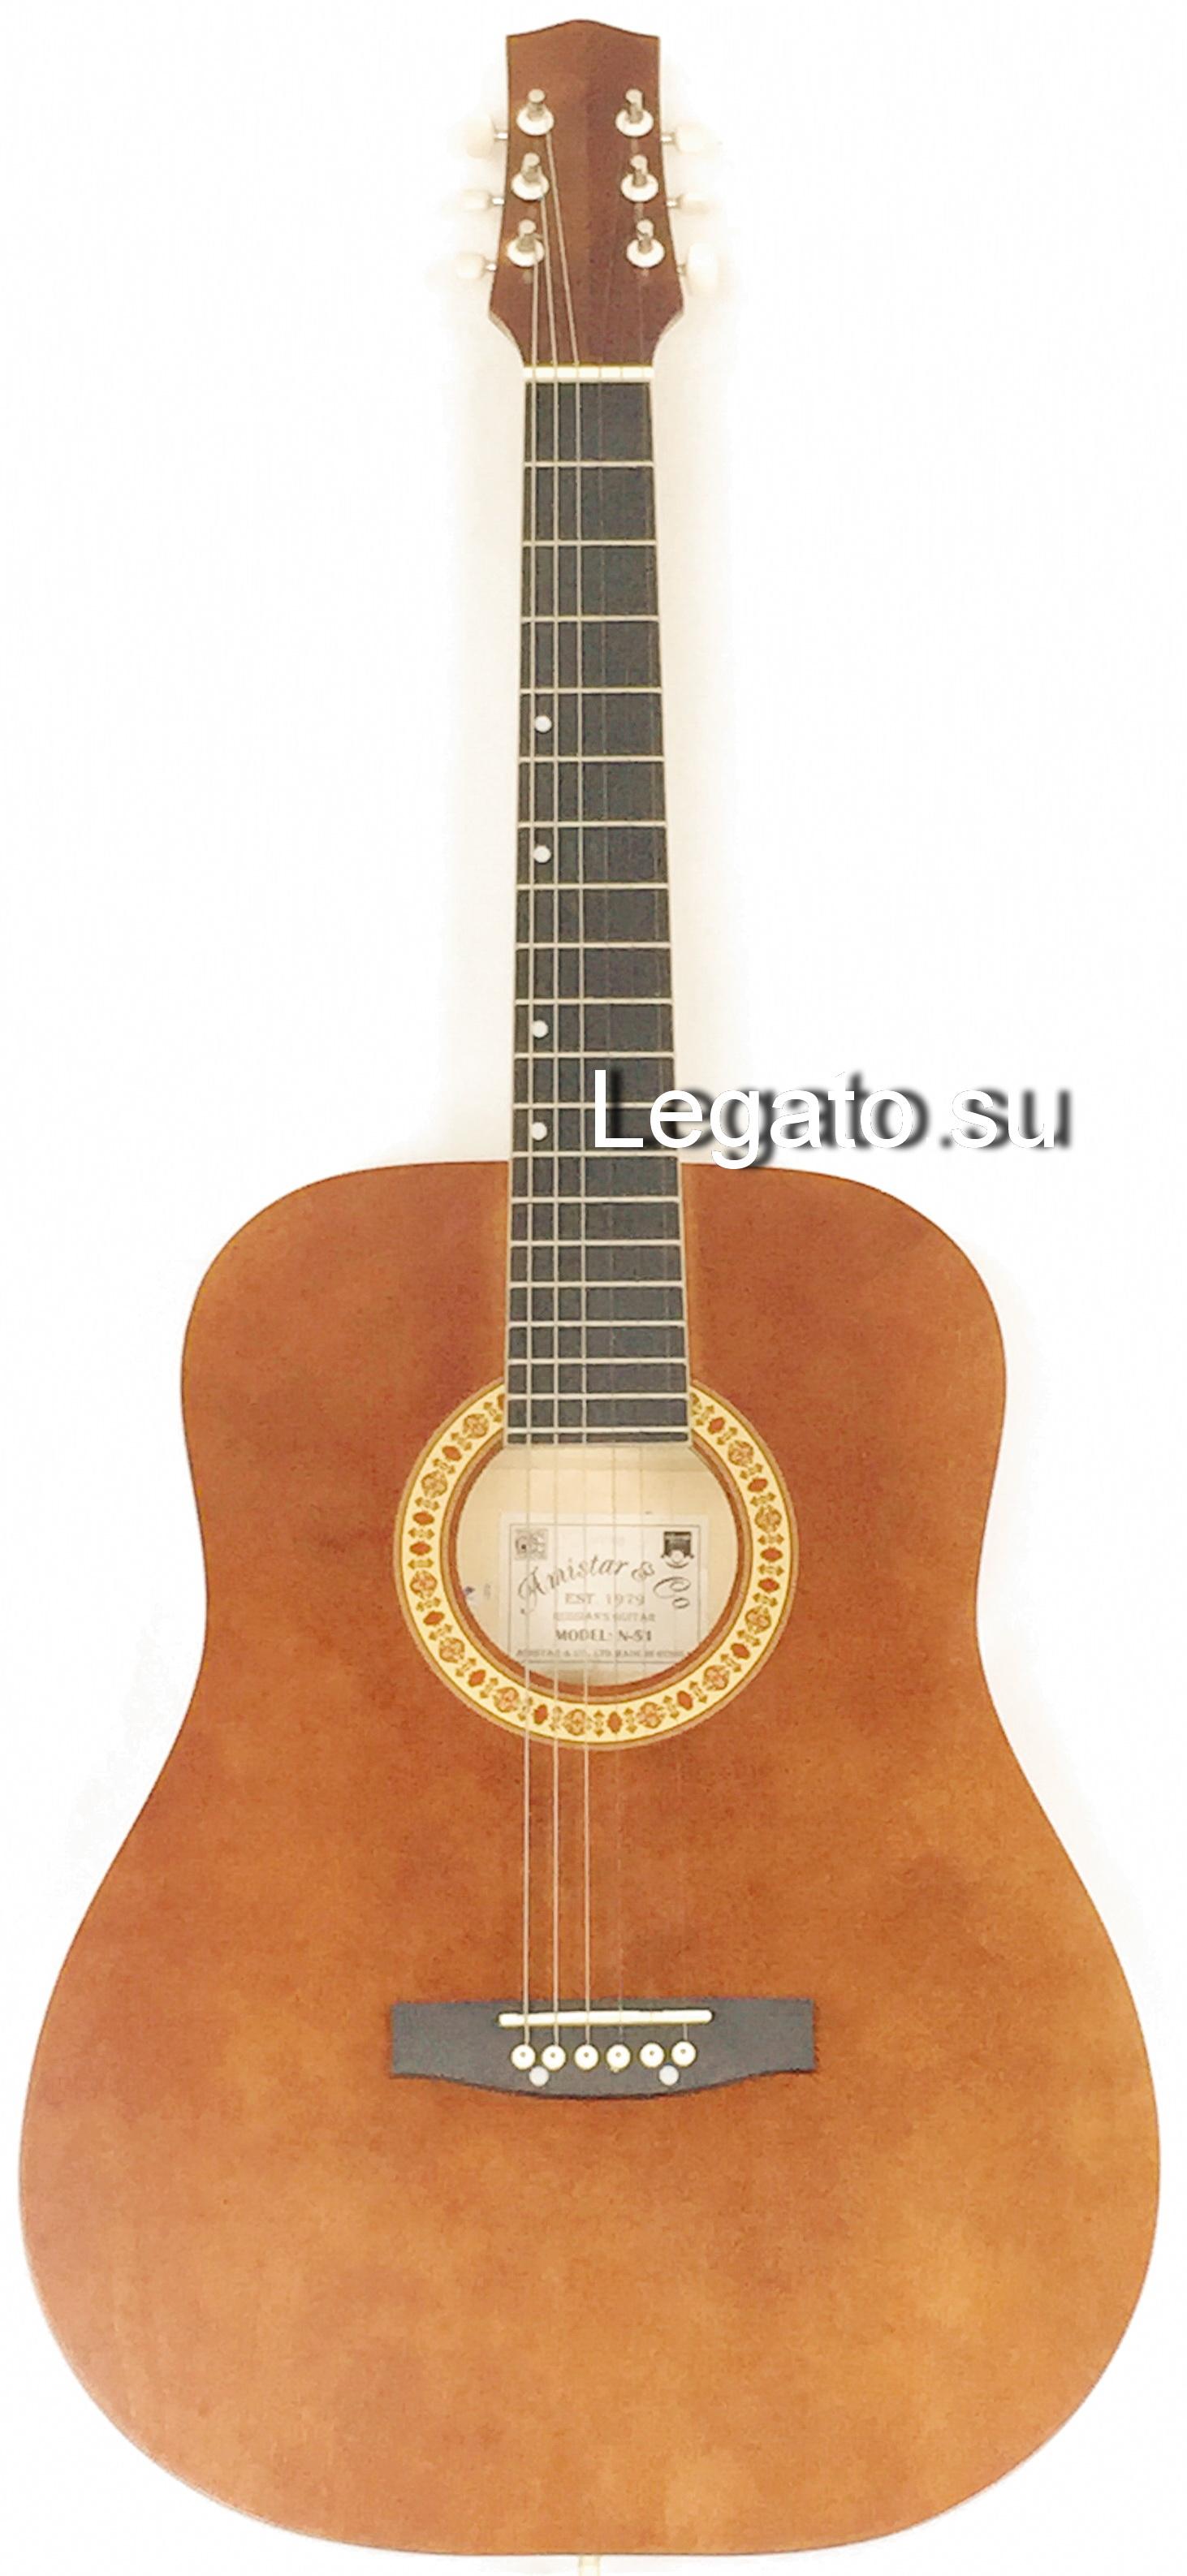 Акустическая гитара Амистар Н-51 МАХ (N-51) цвет махагони